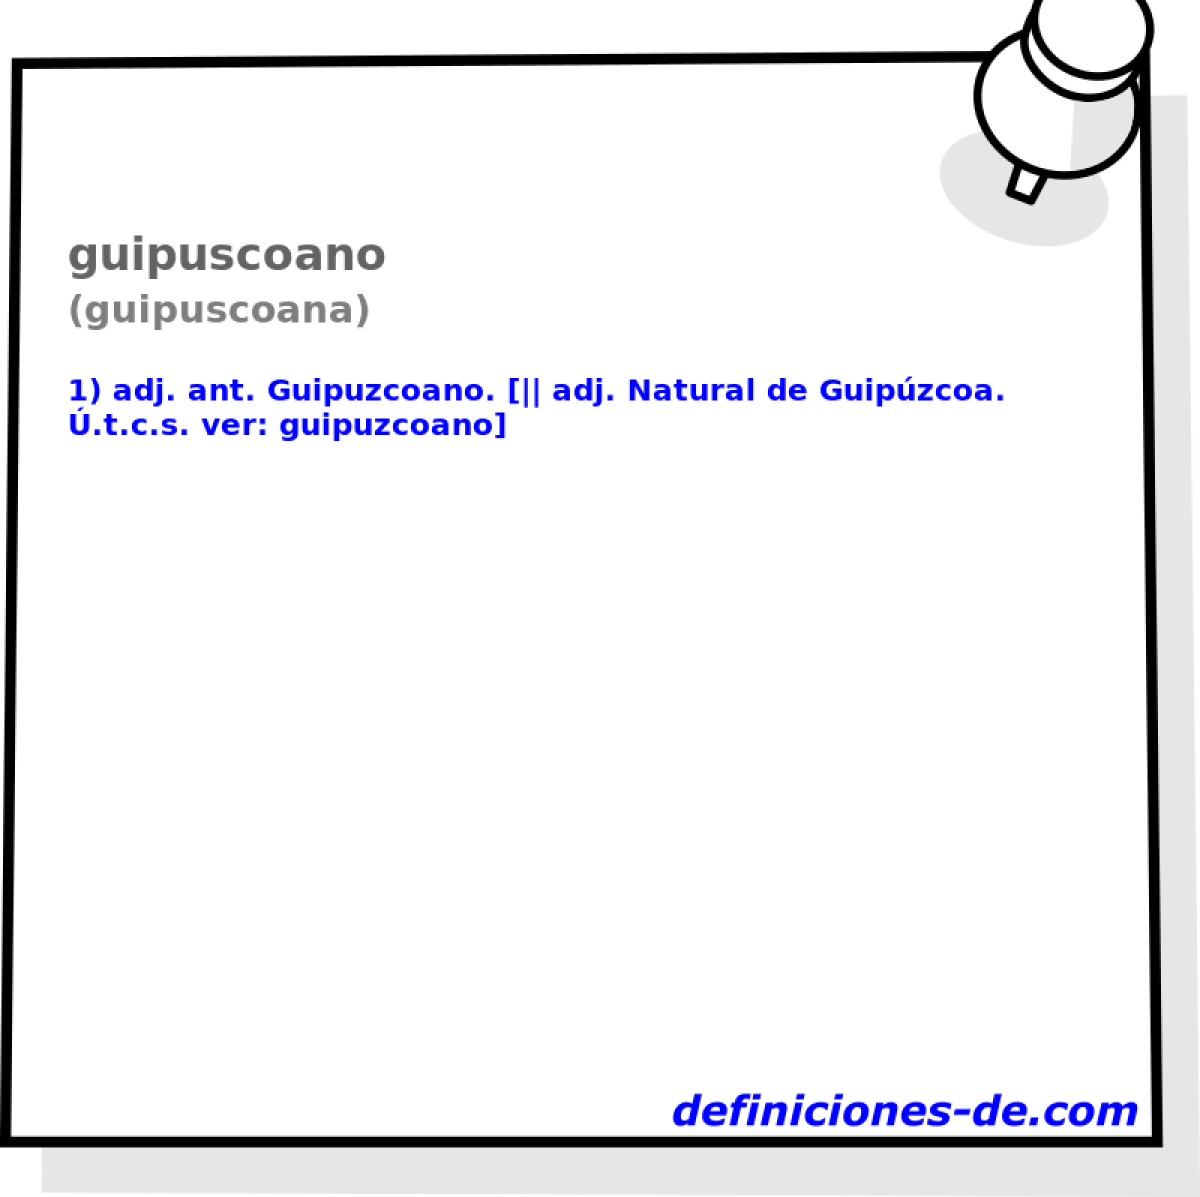 guipuscoano (guipuscoana)